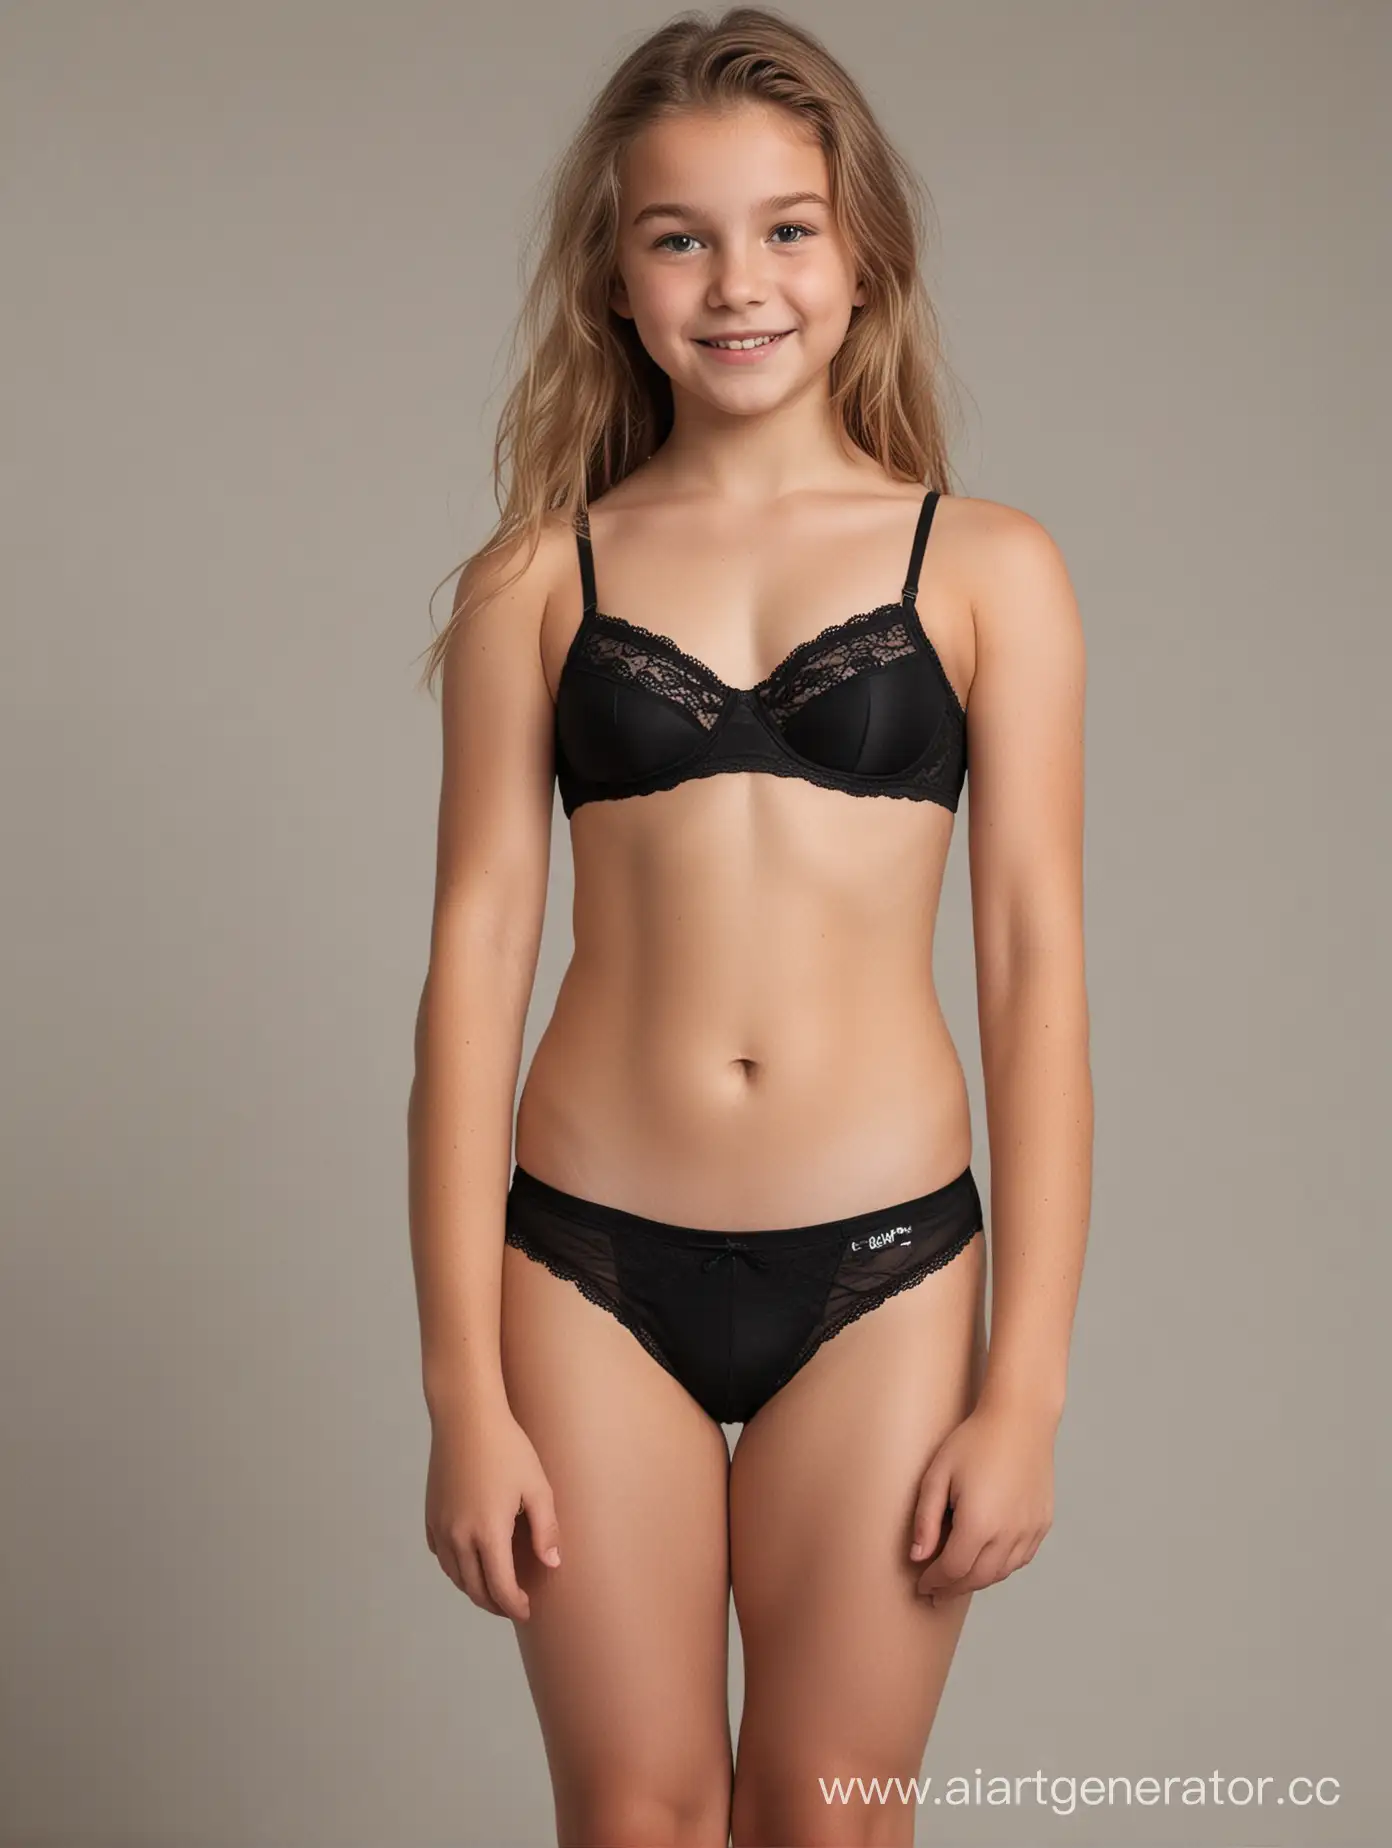 Teenage-Girl-in-Black-Underwear-Posing-with-Confidence